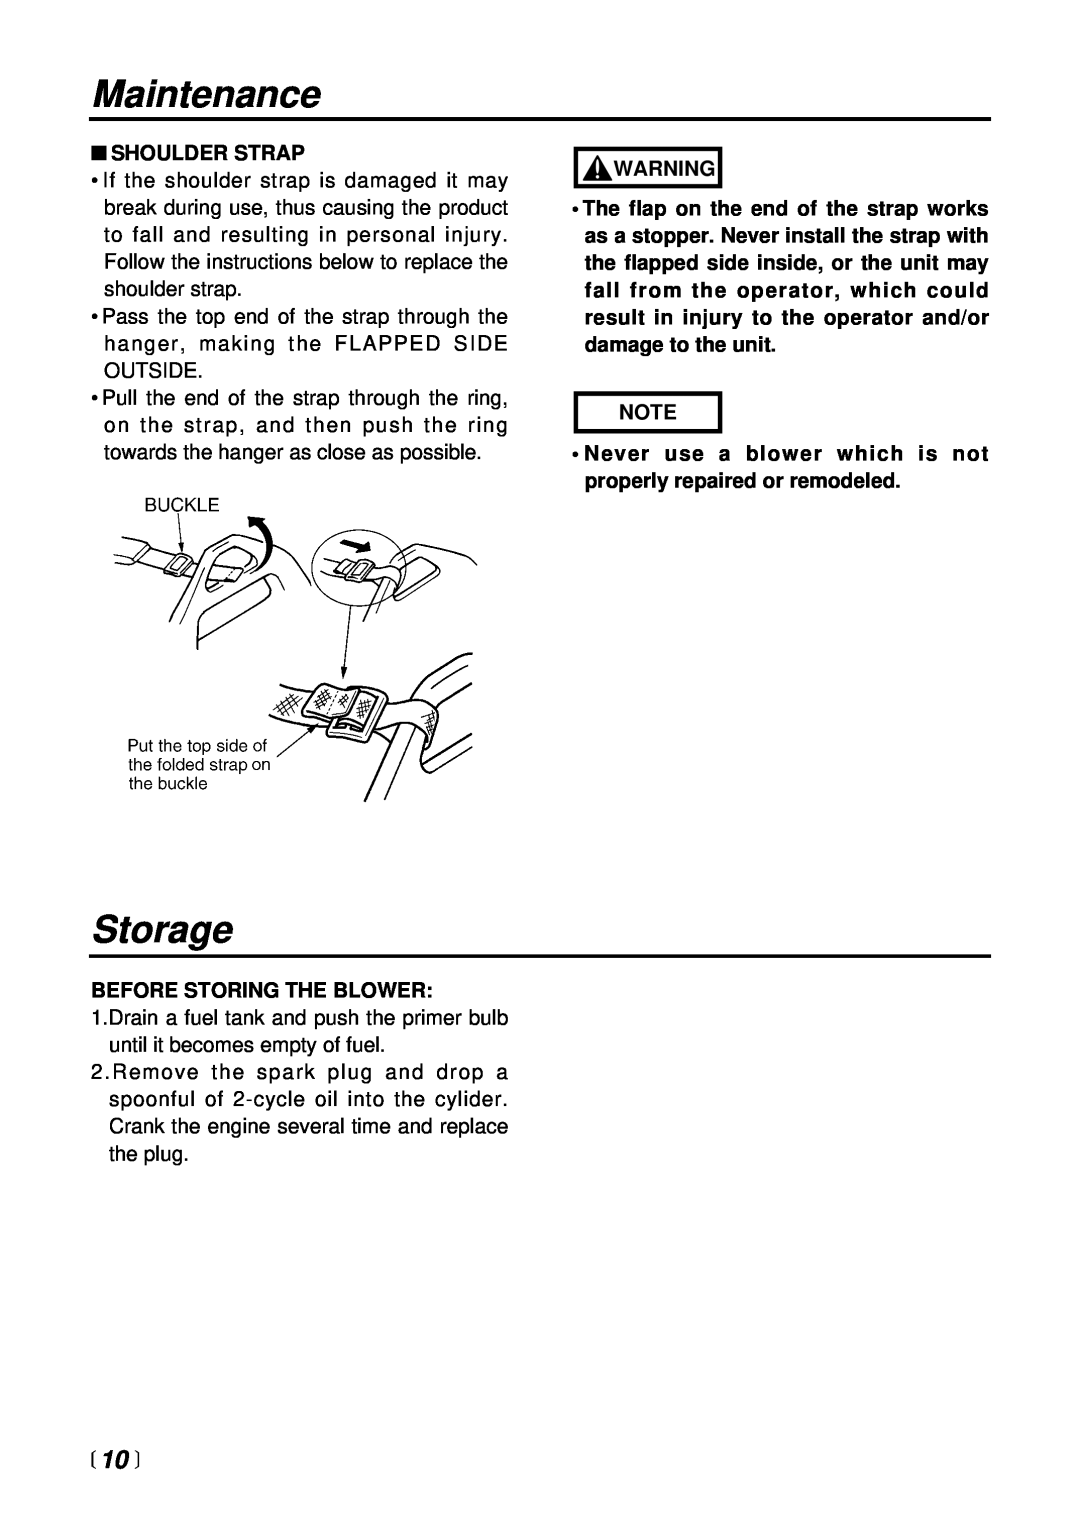 RedMax EB6200 manual Storage, Maintenance, 10  